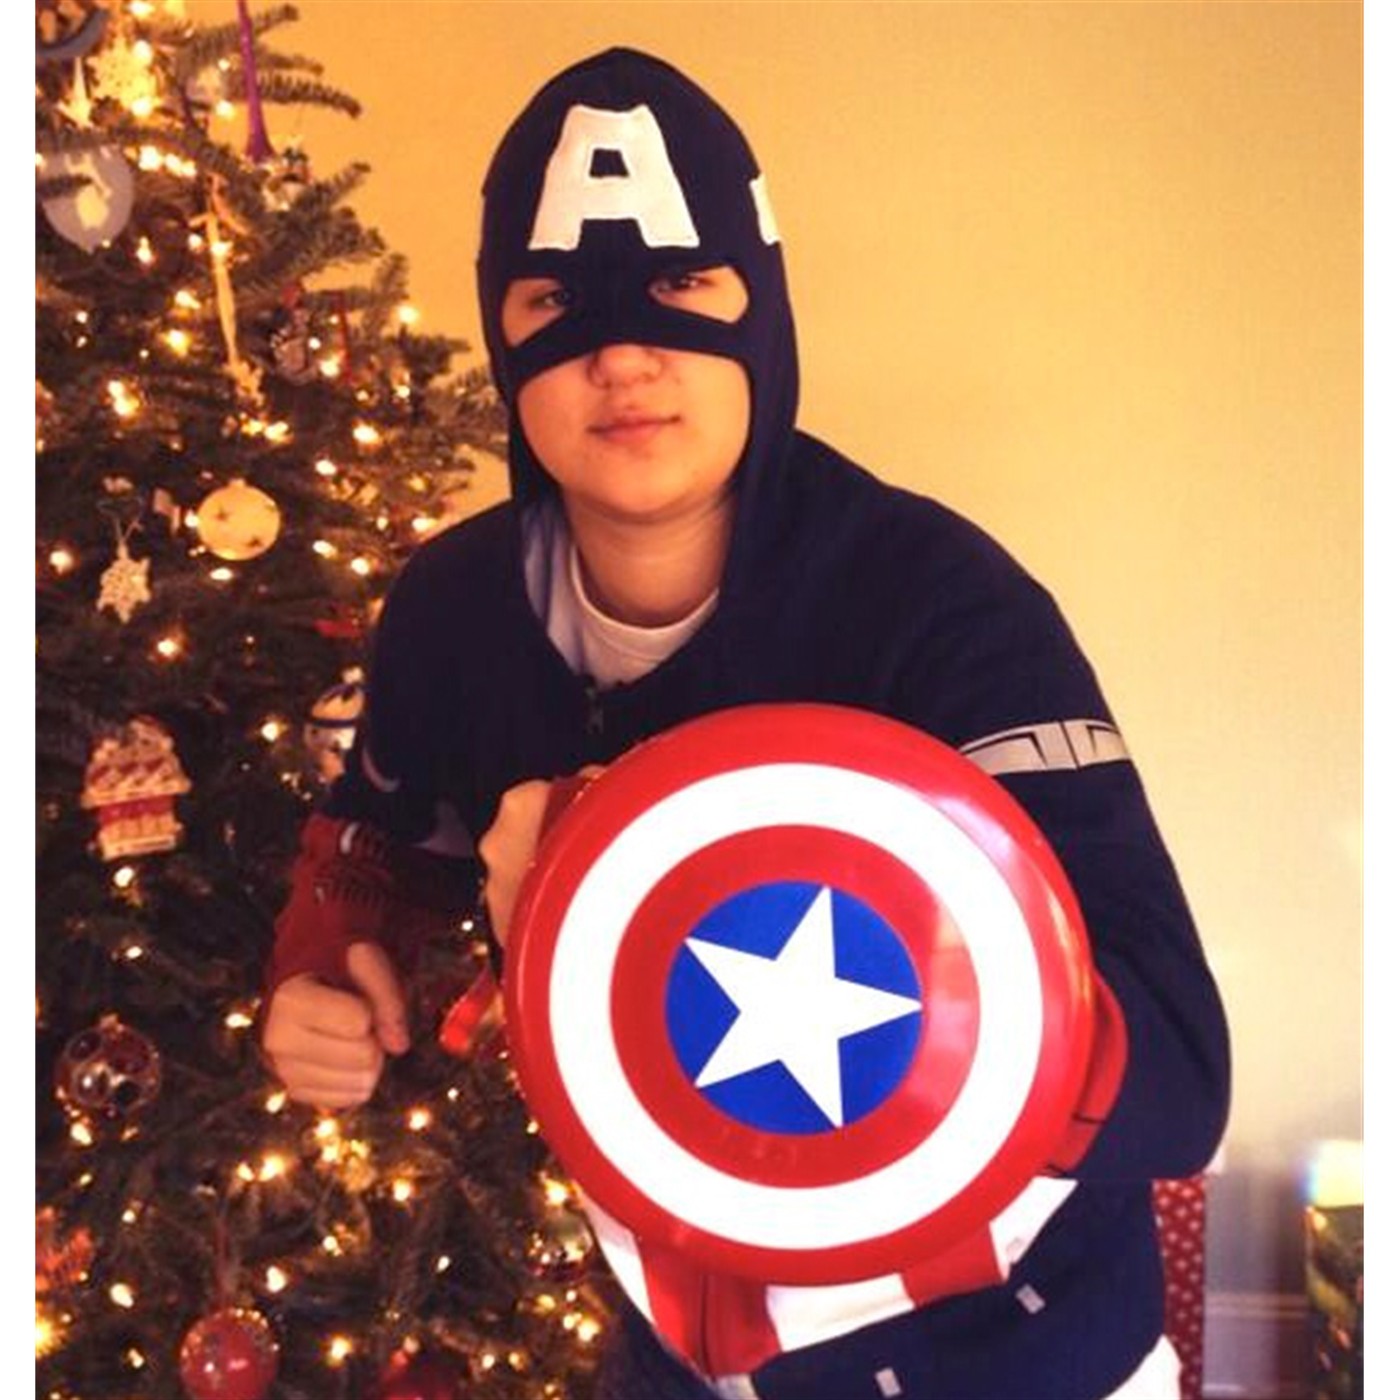 Captain America Movie Masked Costume Hoodie